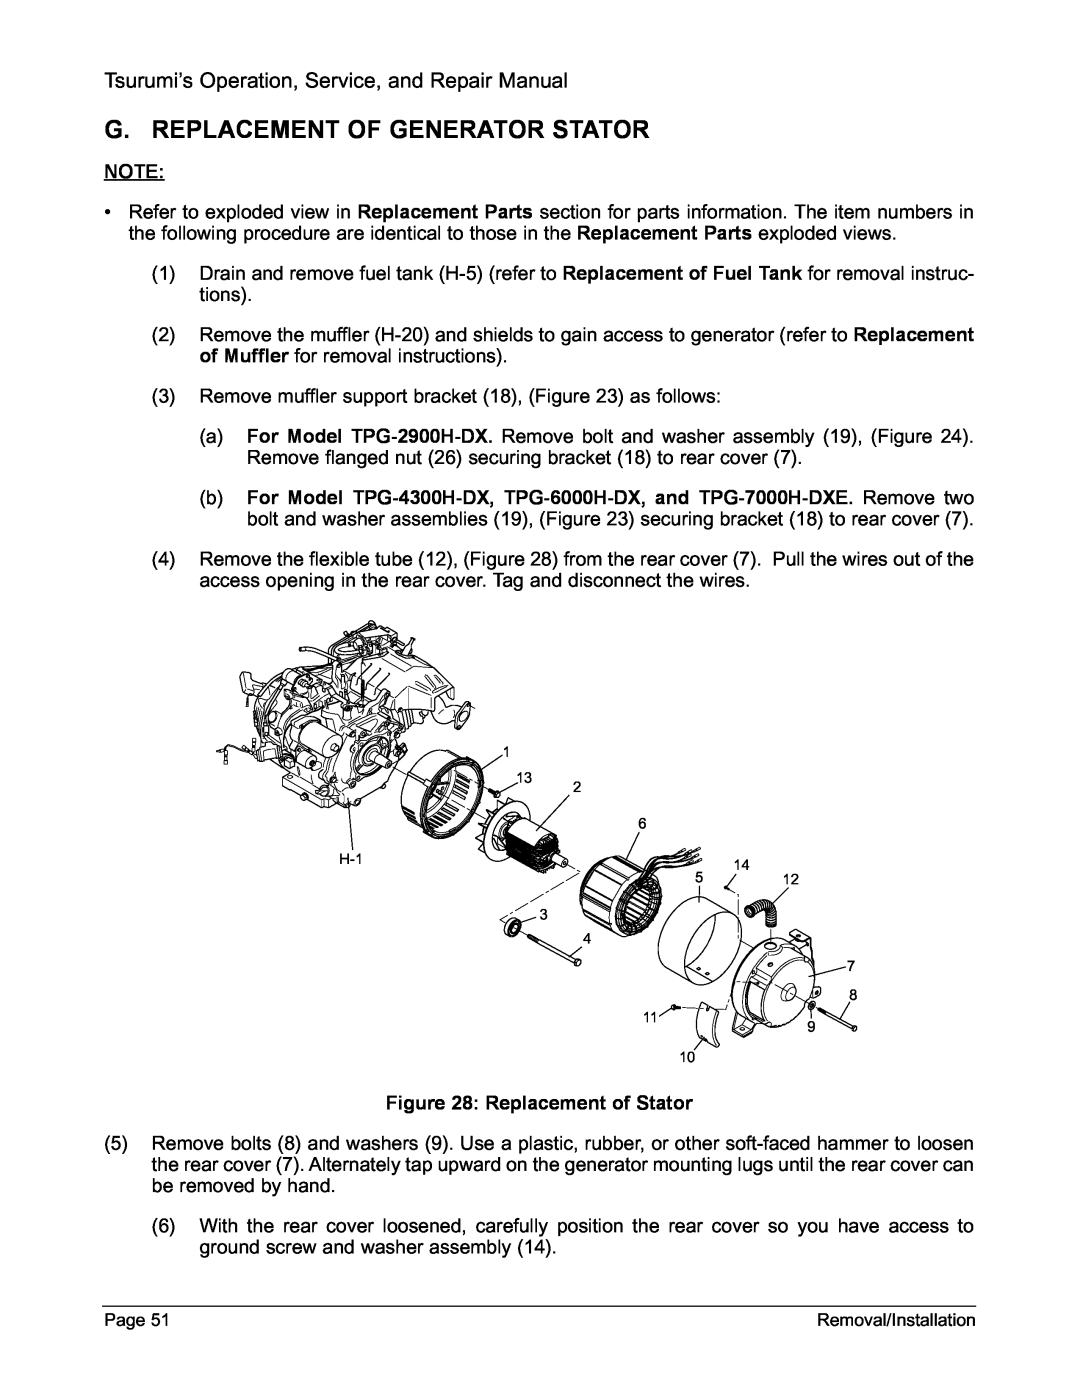 Honda Power Equipment TPG-6000H-DX G. Replacement Of Generator Stator, Tsurumi’s Operation, Service, and Repair Manual 